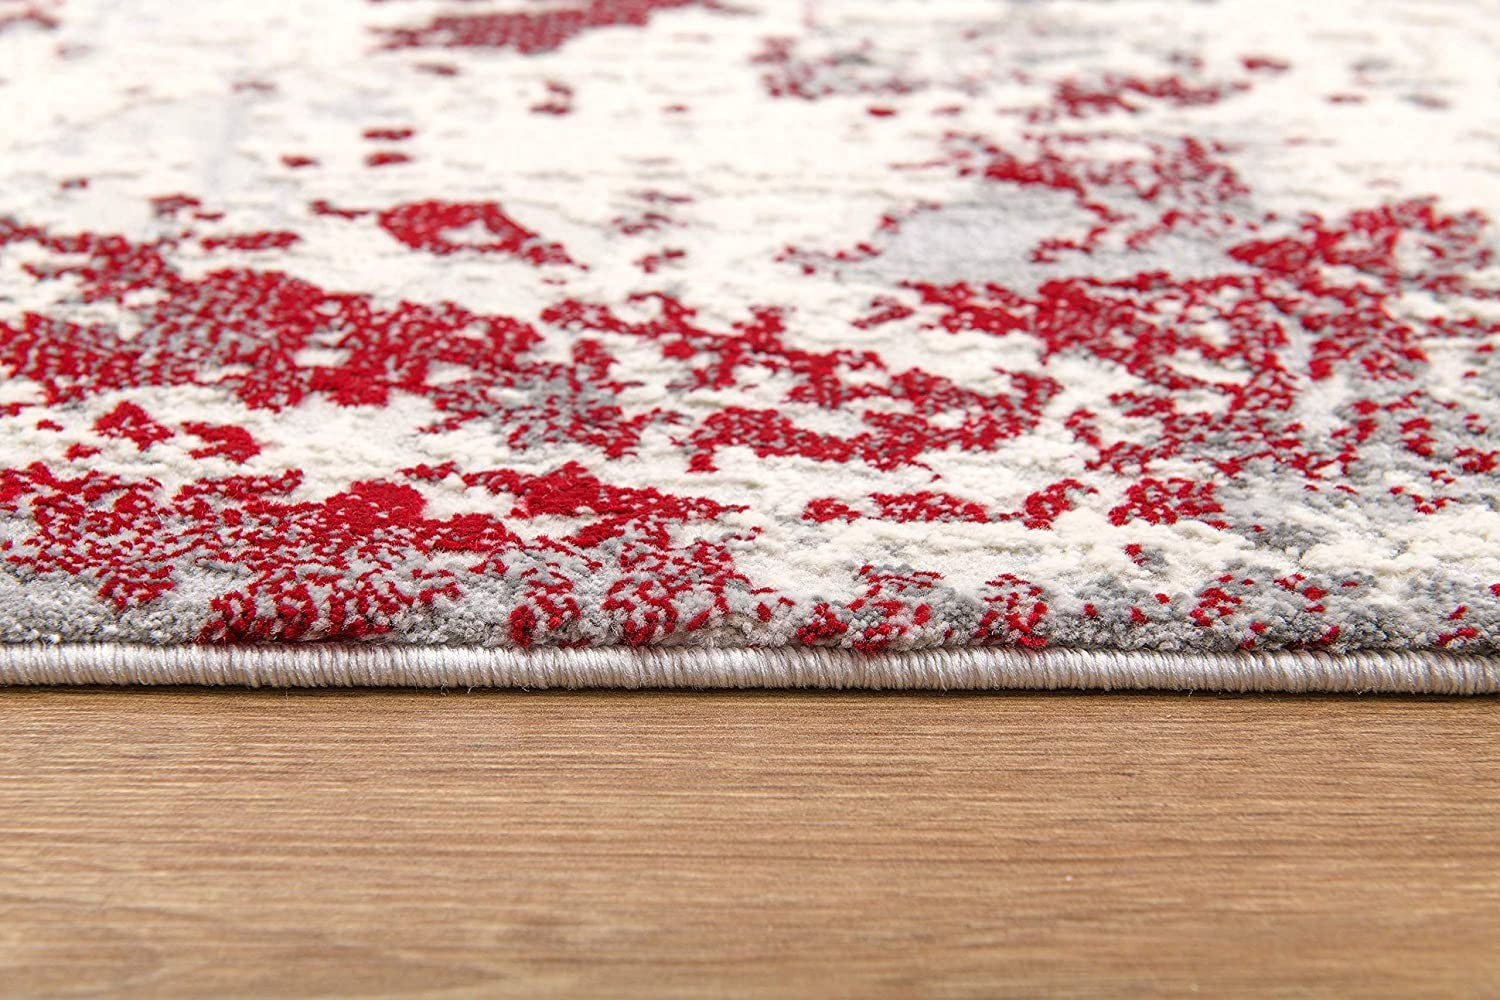 Red & Gray Modern Abstract Floor Mat Decorative Area Rug, 5 x 8 Feet